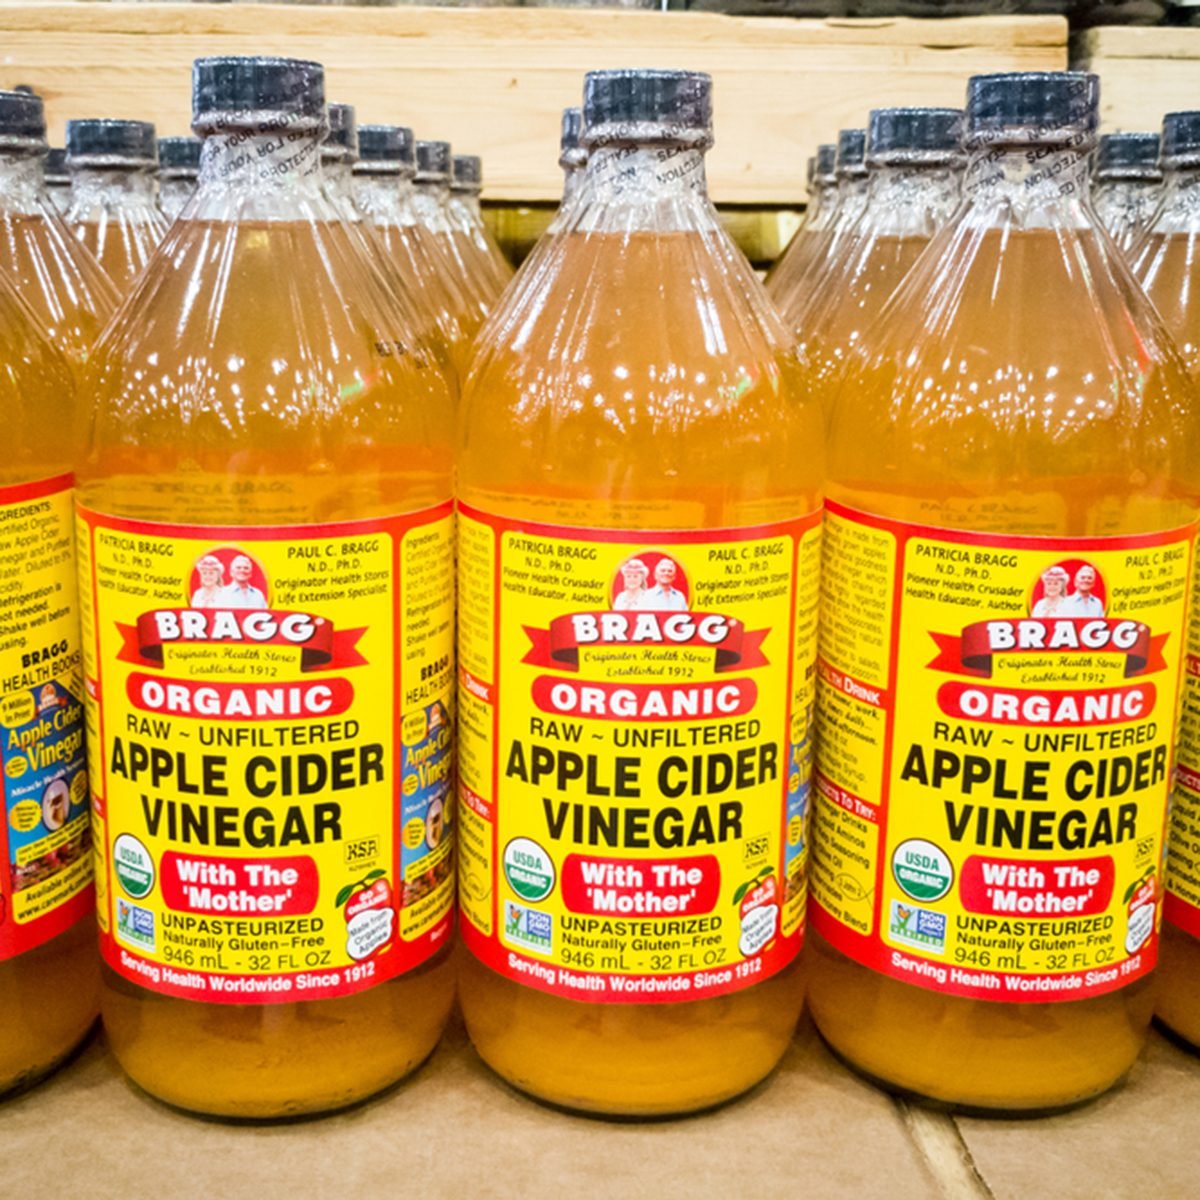 Apple cider vinegar and natural remedies